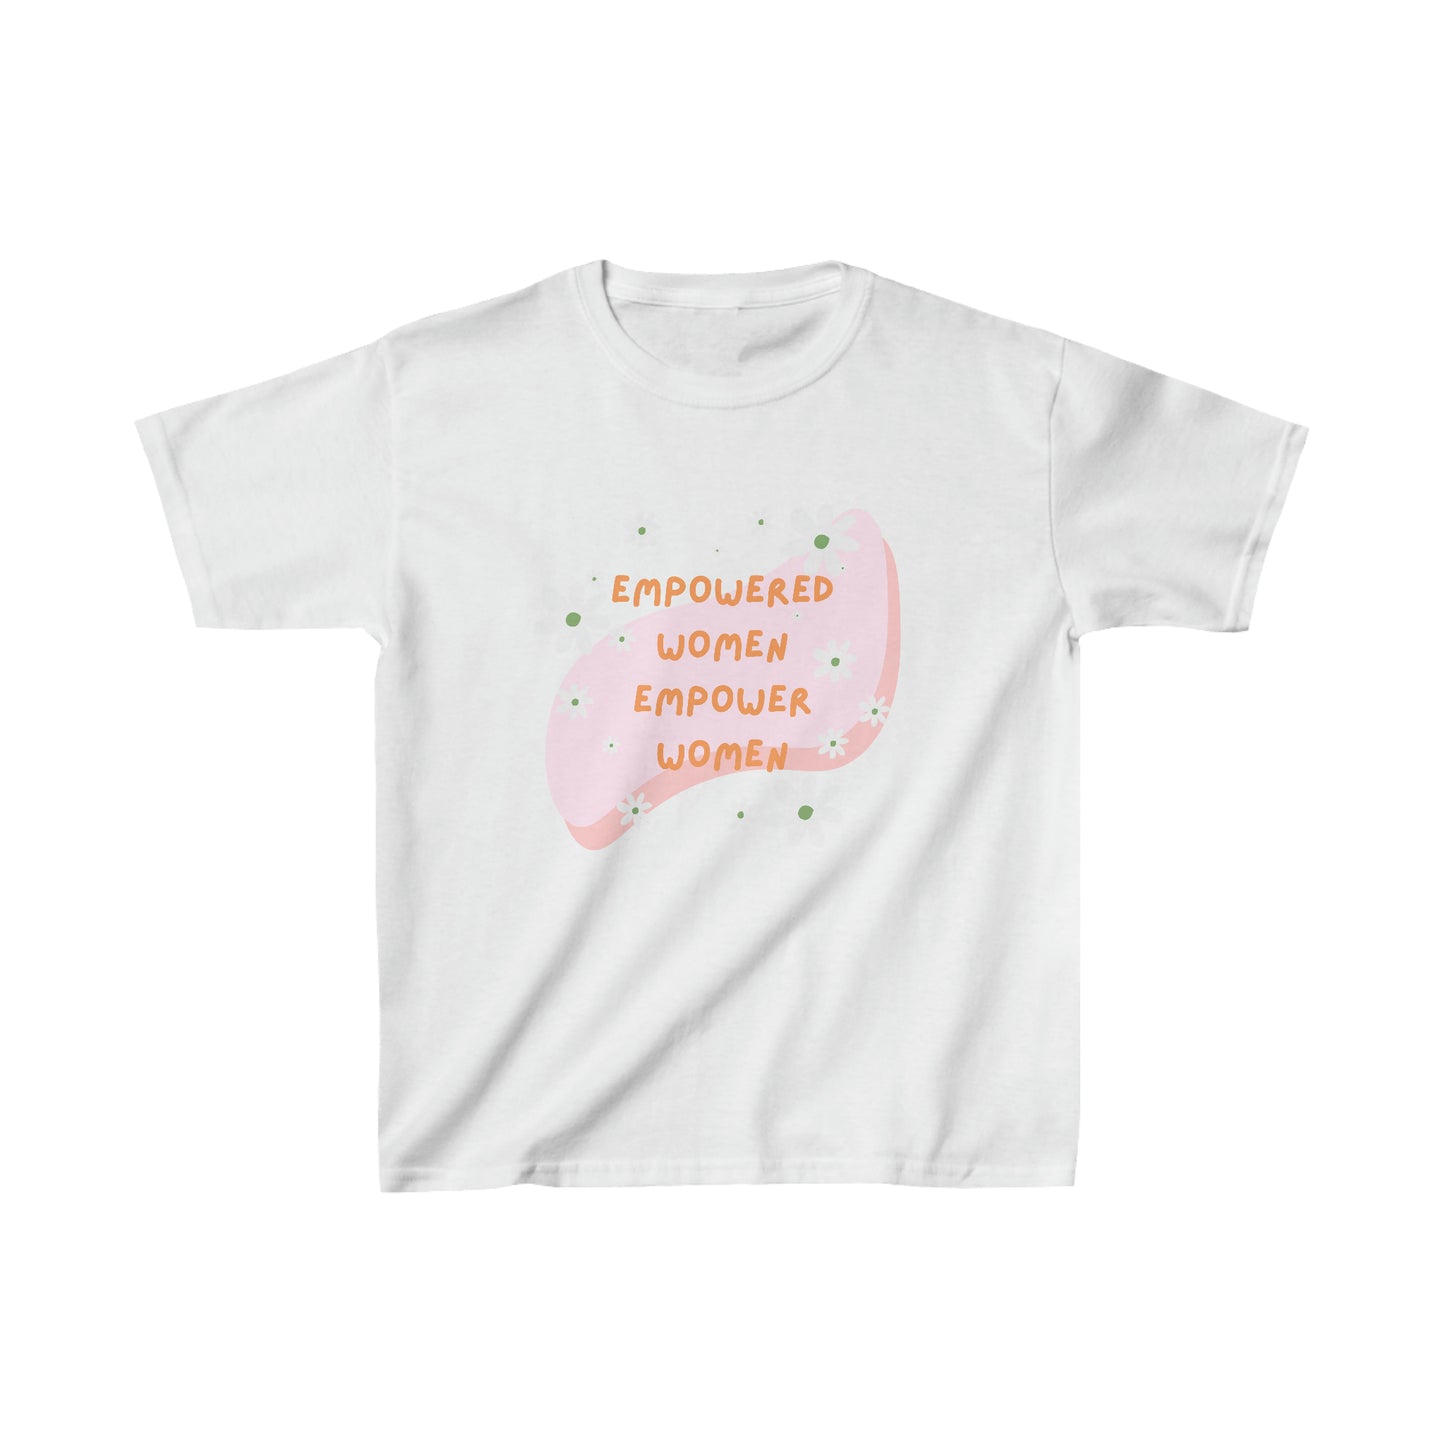 EMPOWERED WOMEN t-shirt - child